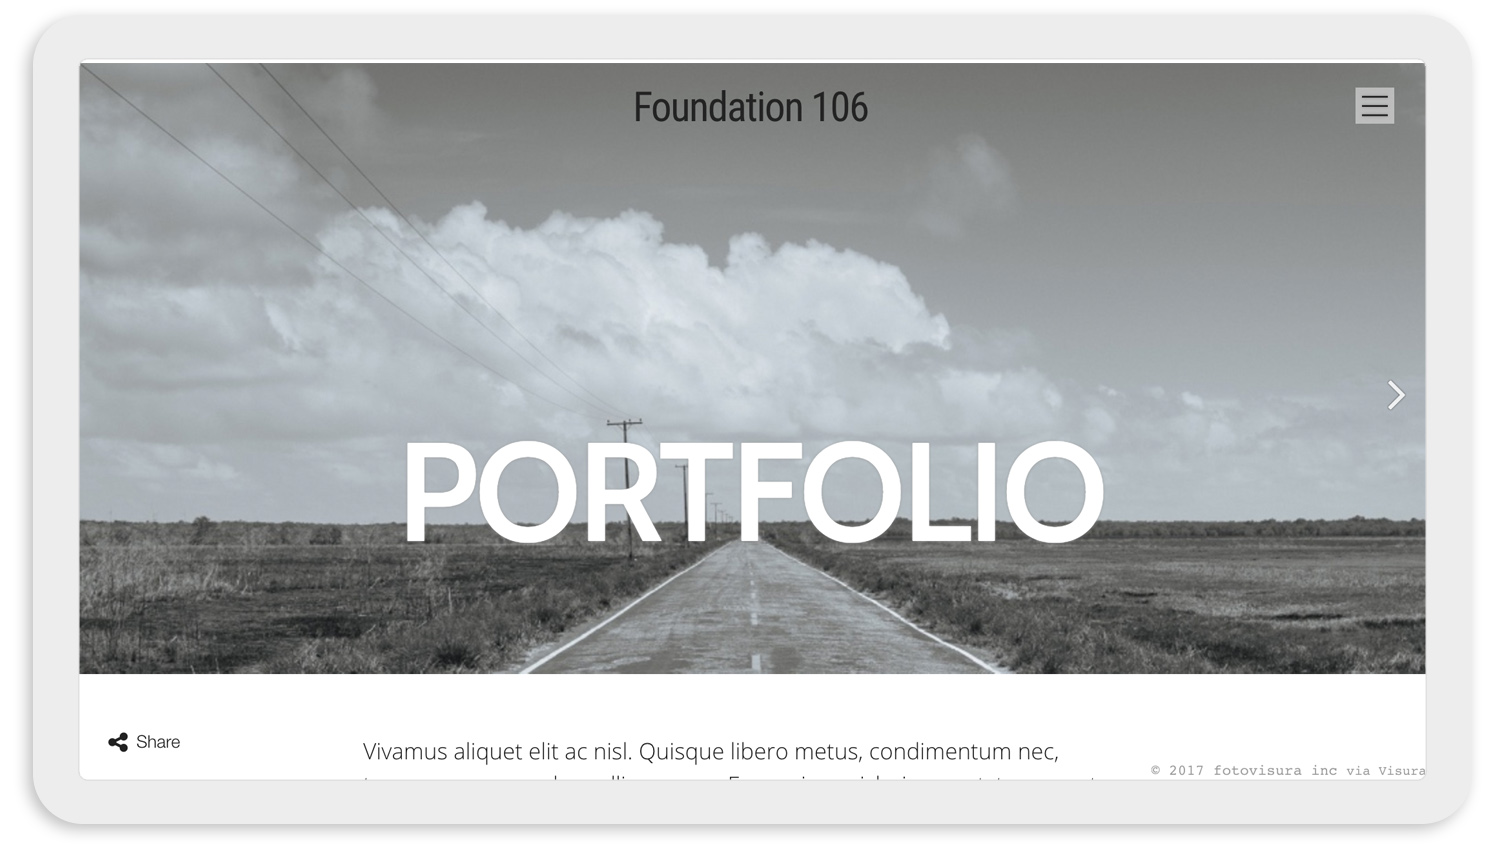 Visura Photography websites - desktop template 106